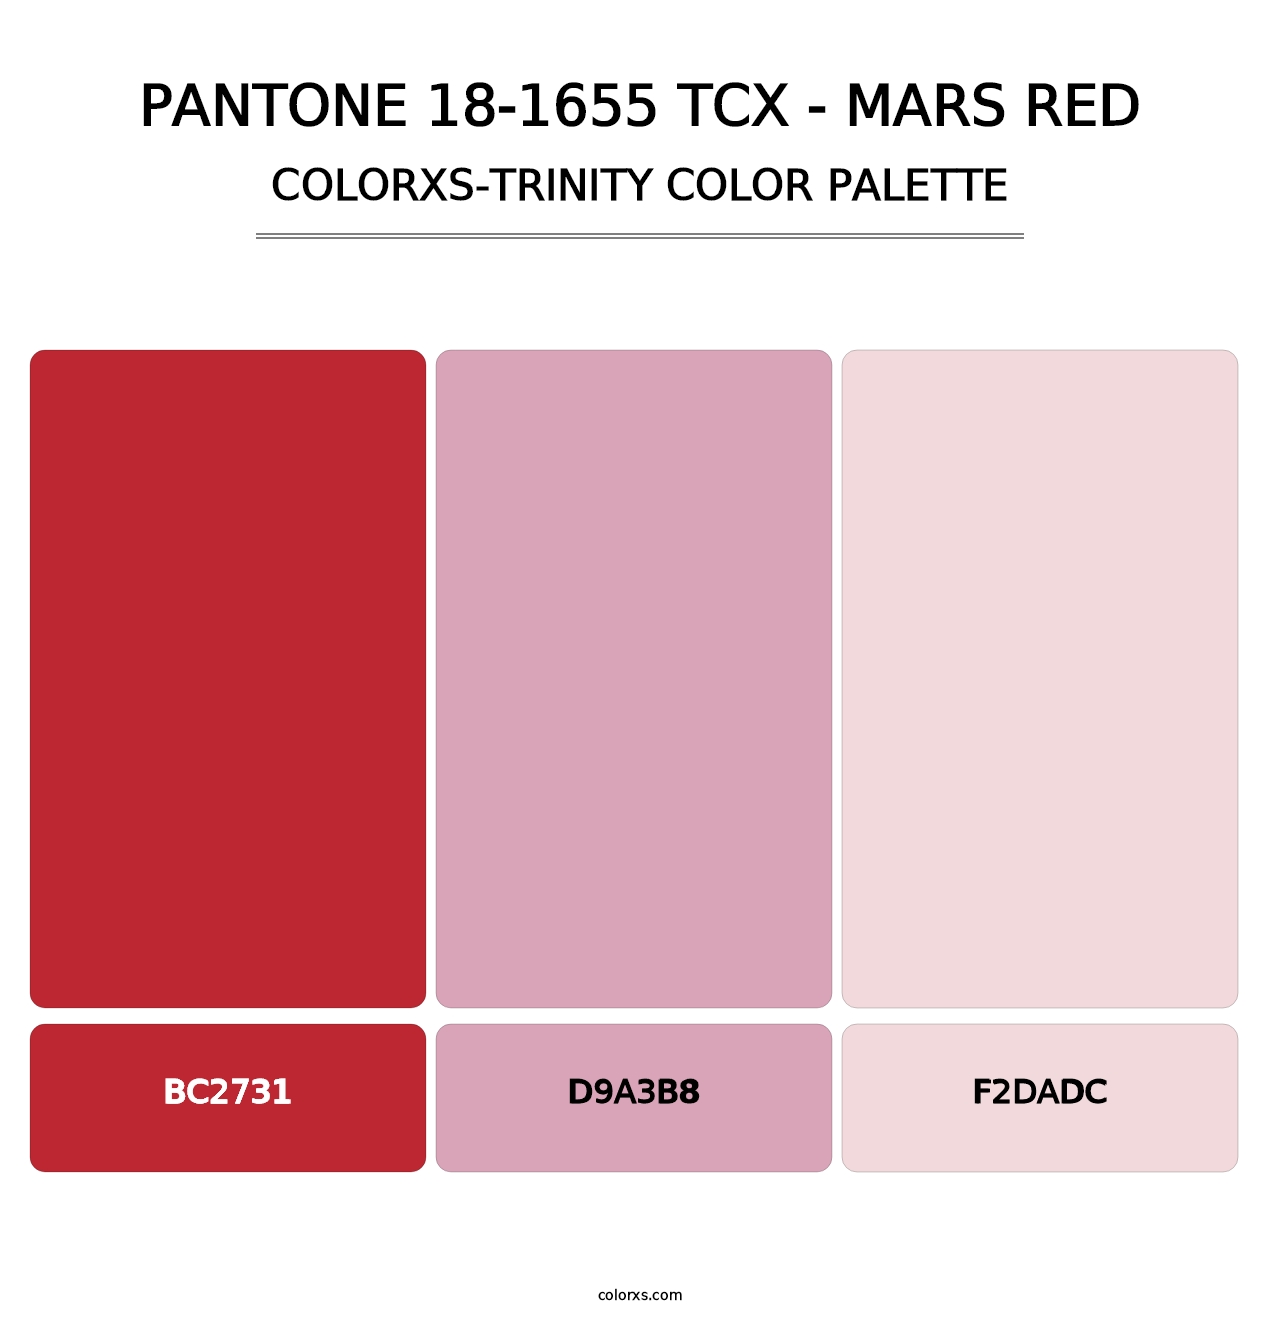 PANTONE 18-1655 TCX - Mars Red - Colorxs Trinity Palette